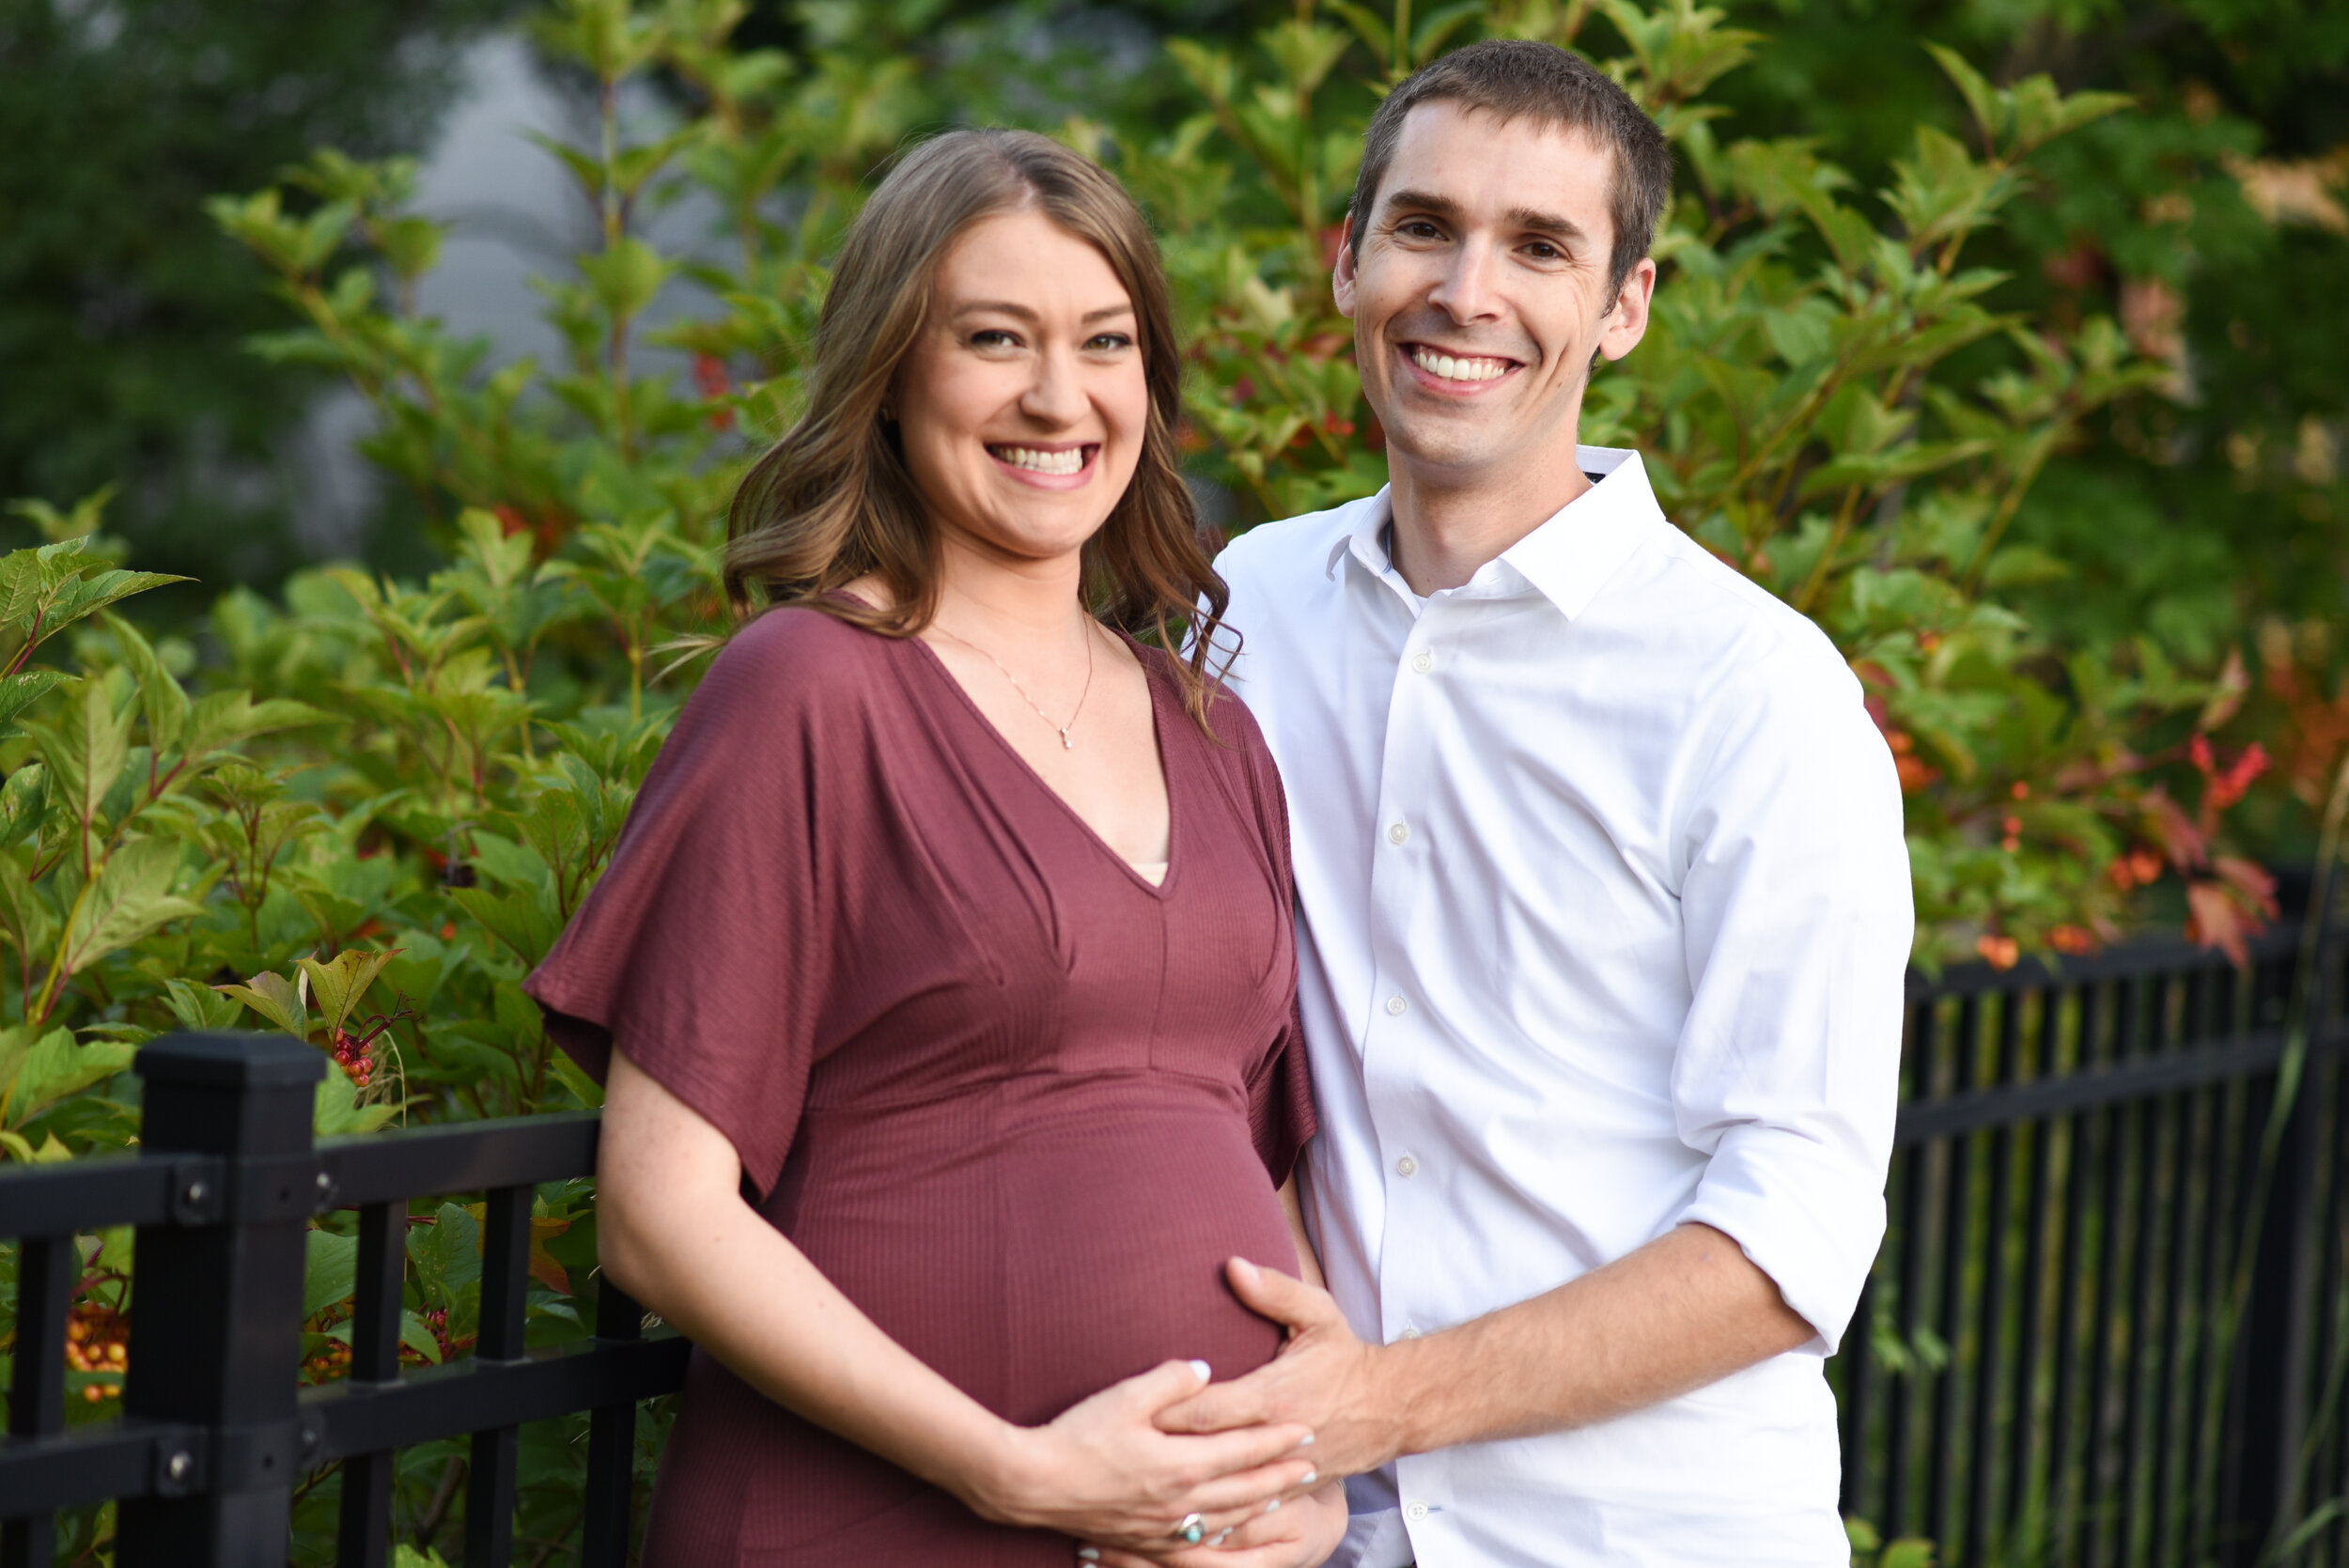 159_Sarah and Jim Portman Maternity 2019.jpg